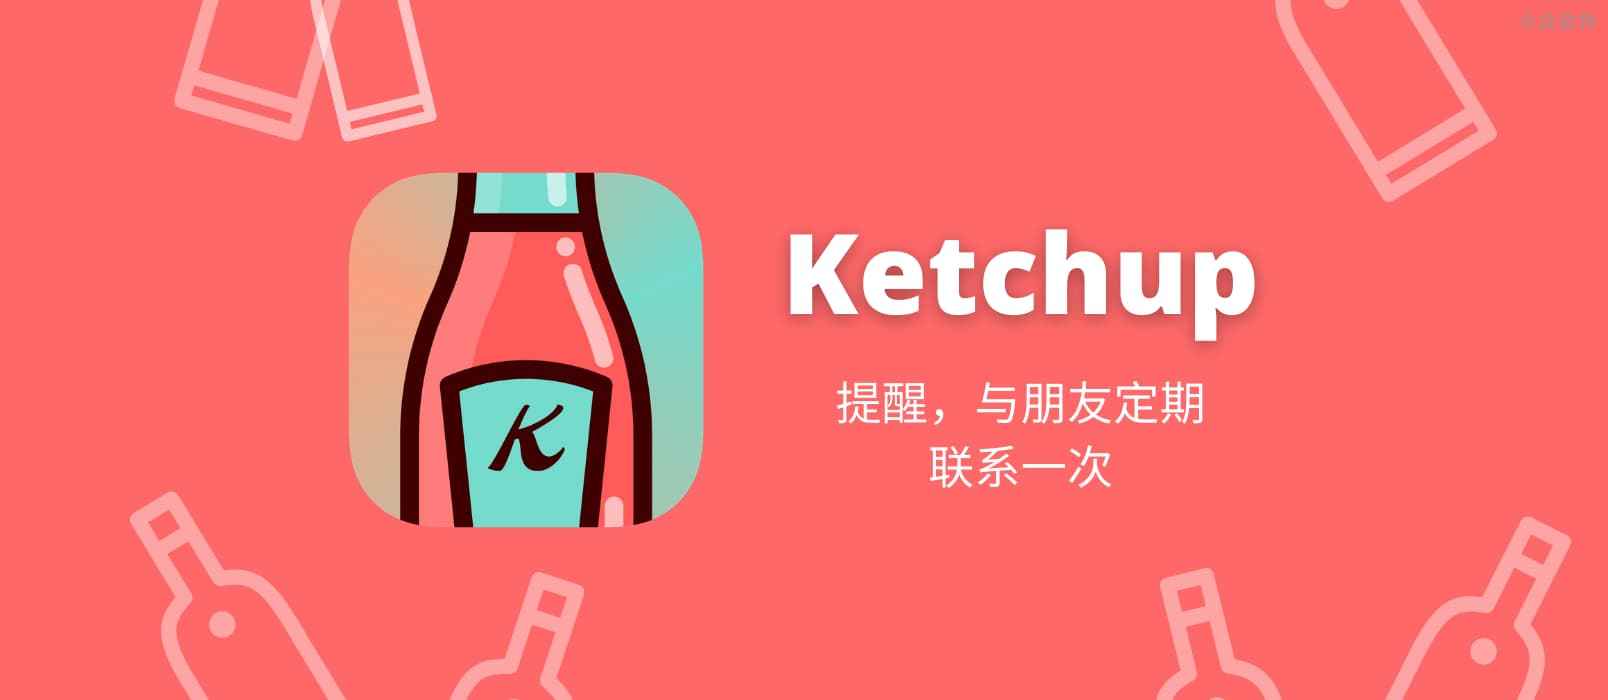 Ketchup - 将“和朋友保持联系”这句空话，变成现实[iPhone]